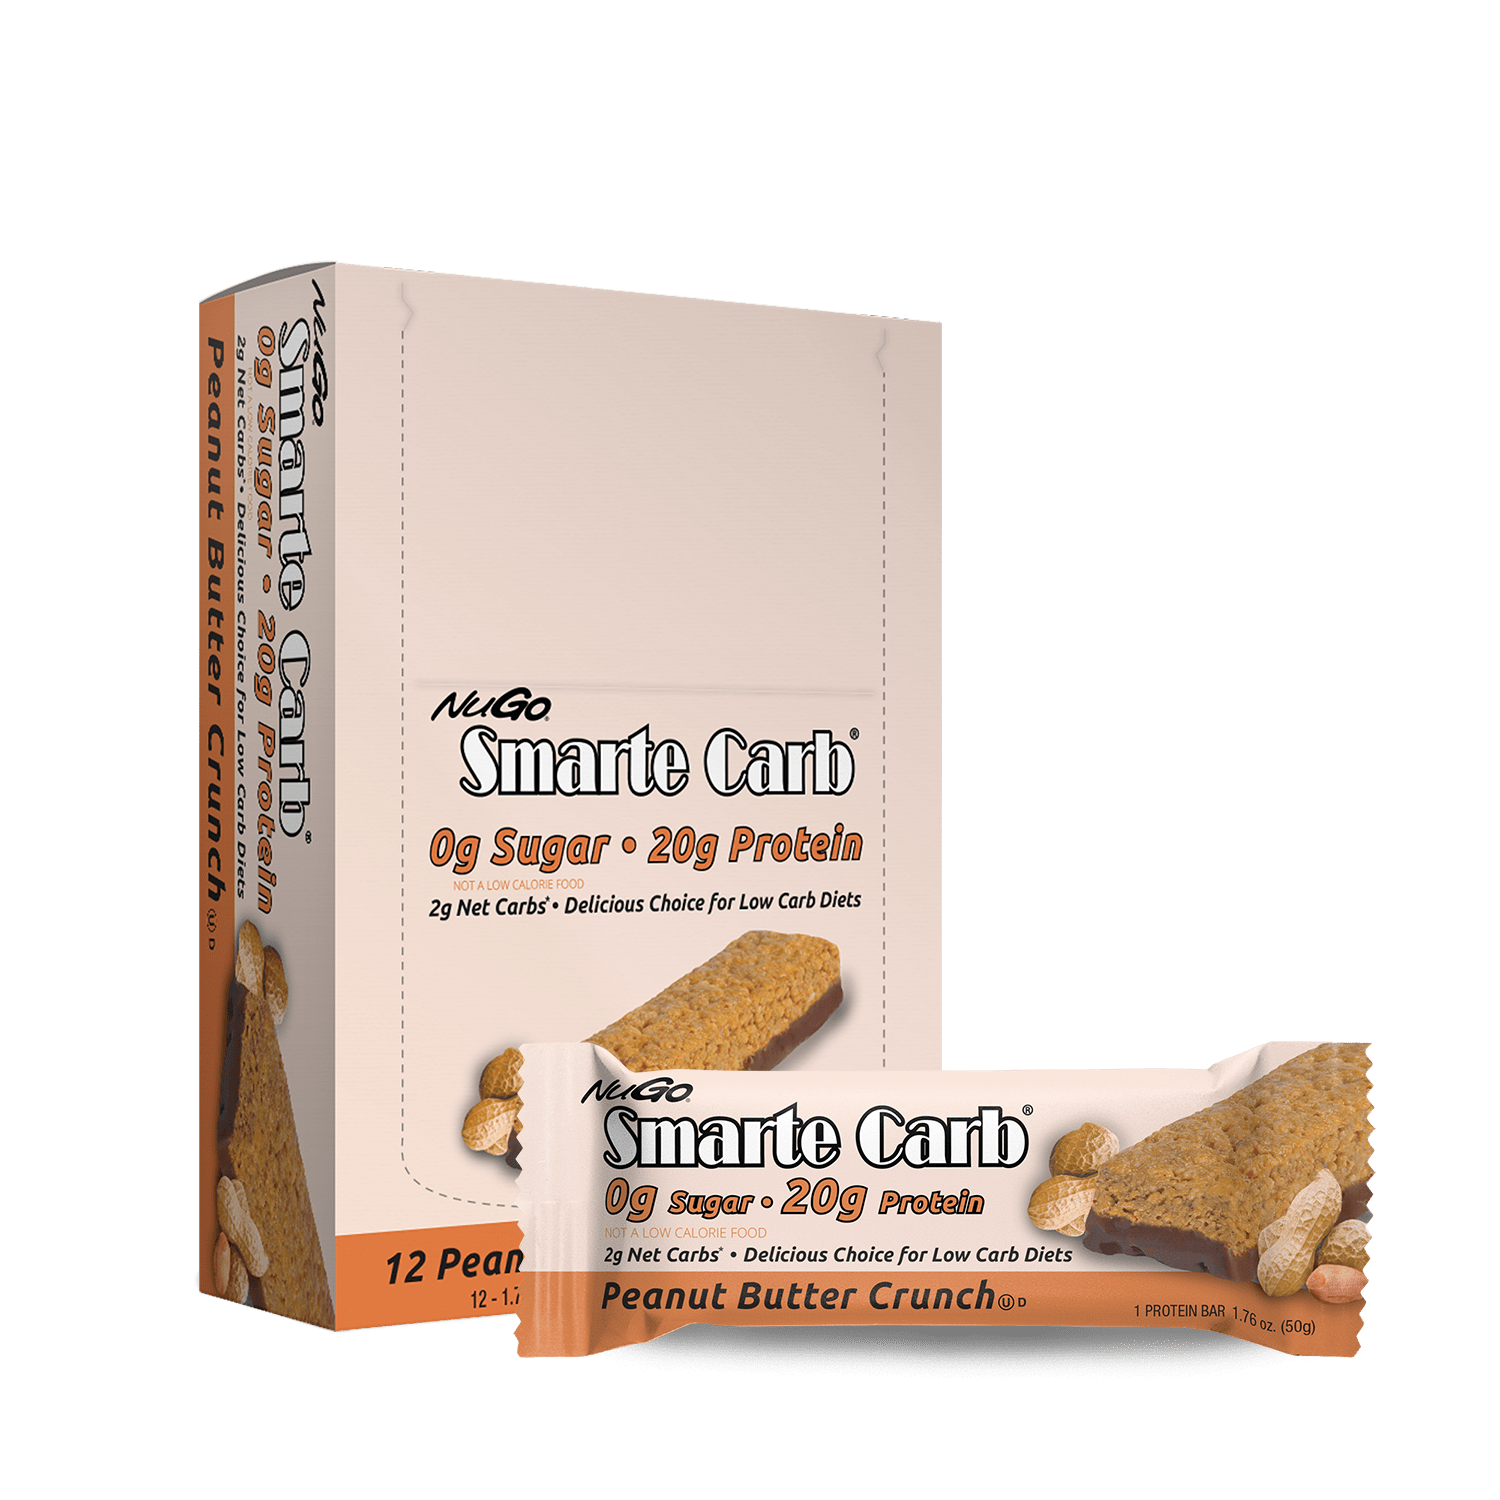 Smarte Carb Peanut Butter Crunch Bar and Box